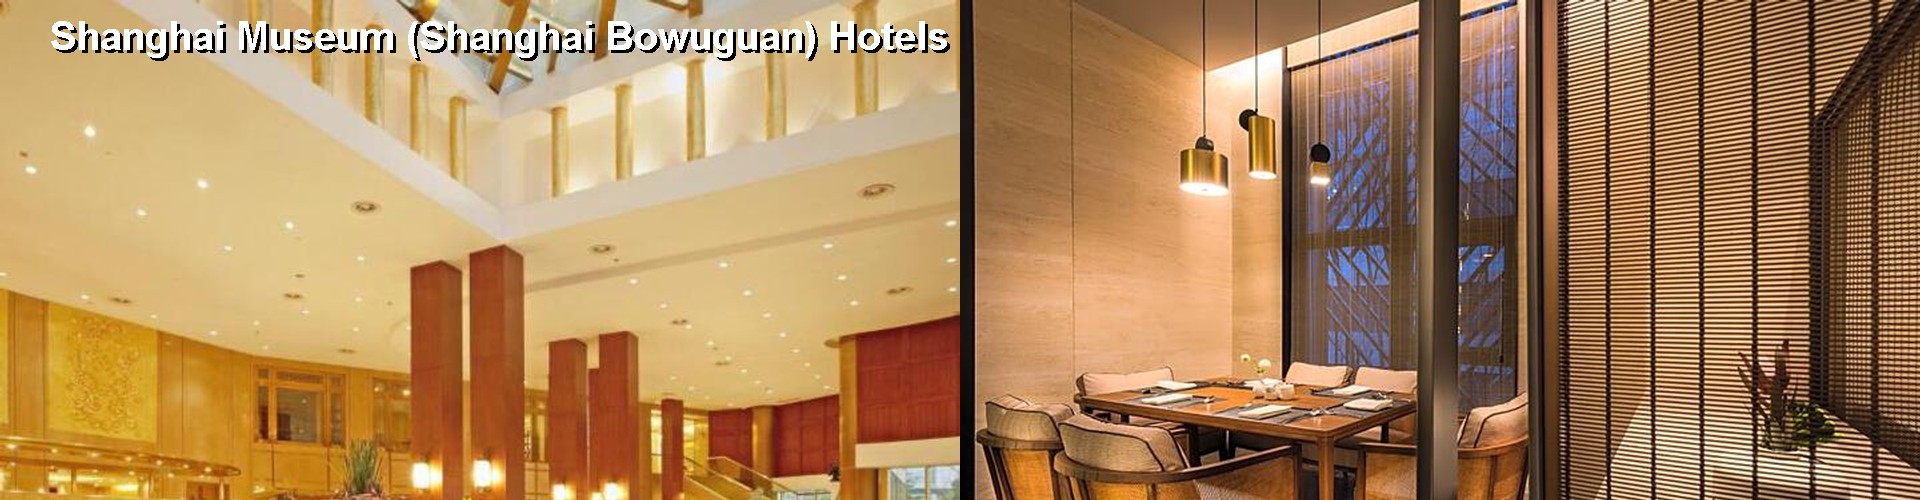 3 Best Hotels near Shanghai Museum (Shanghai Bowuguan)